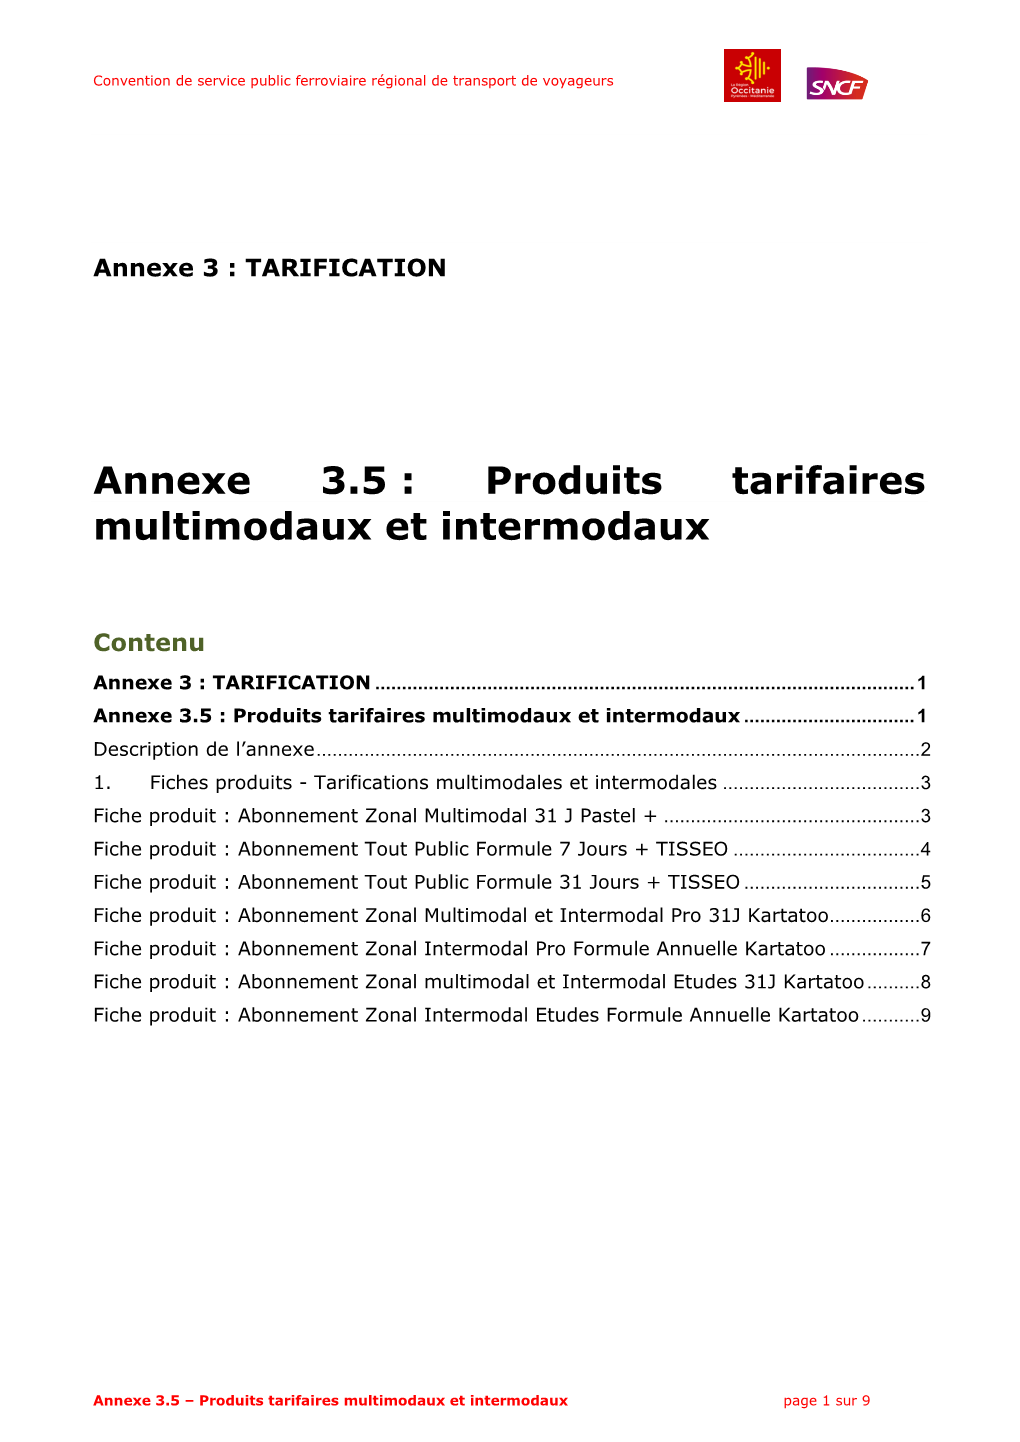 Annexe 3.5 : Produits Tarifaires Multimodaux Et Intermodaux